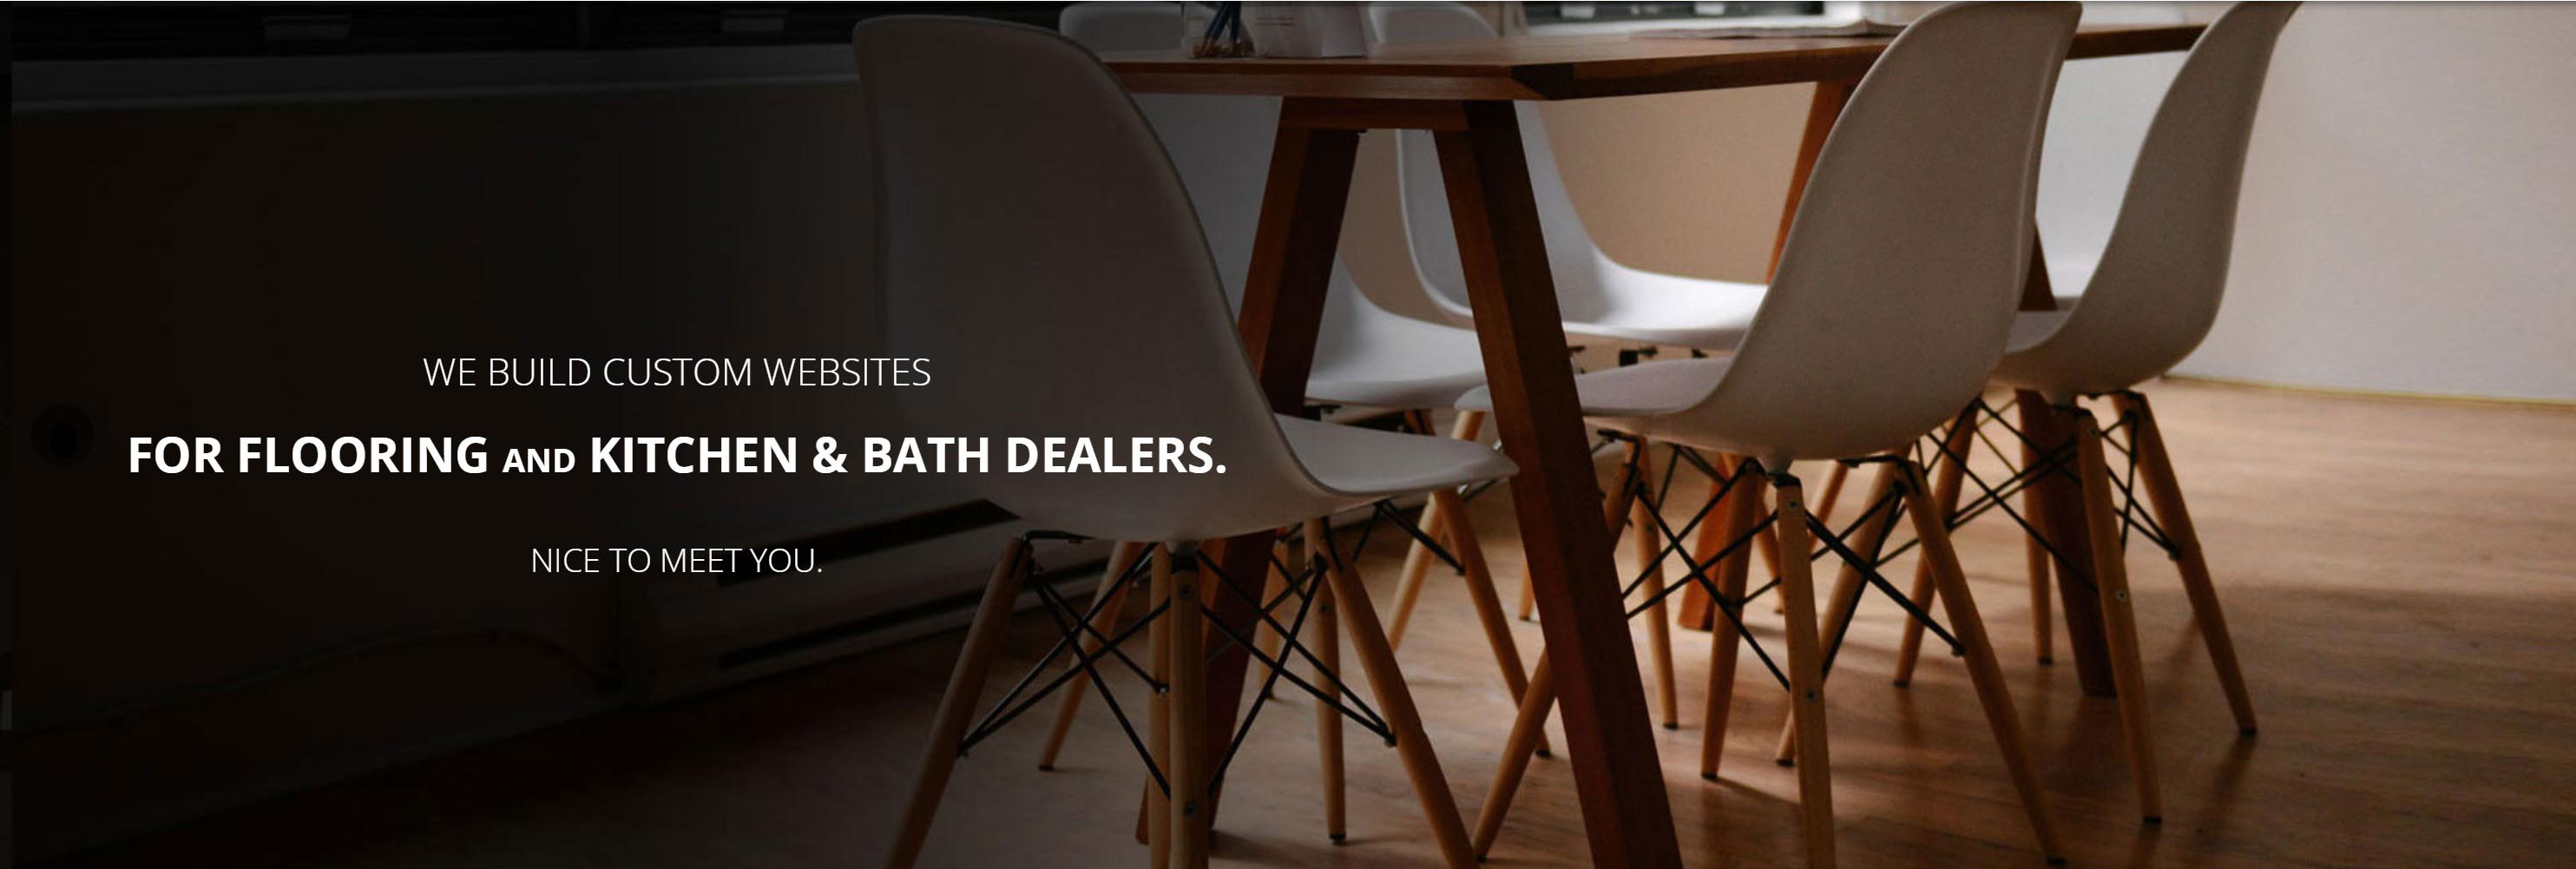 We Build Custom Websites
For Flooring and Kitchen & Bath Dealers.